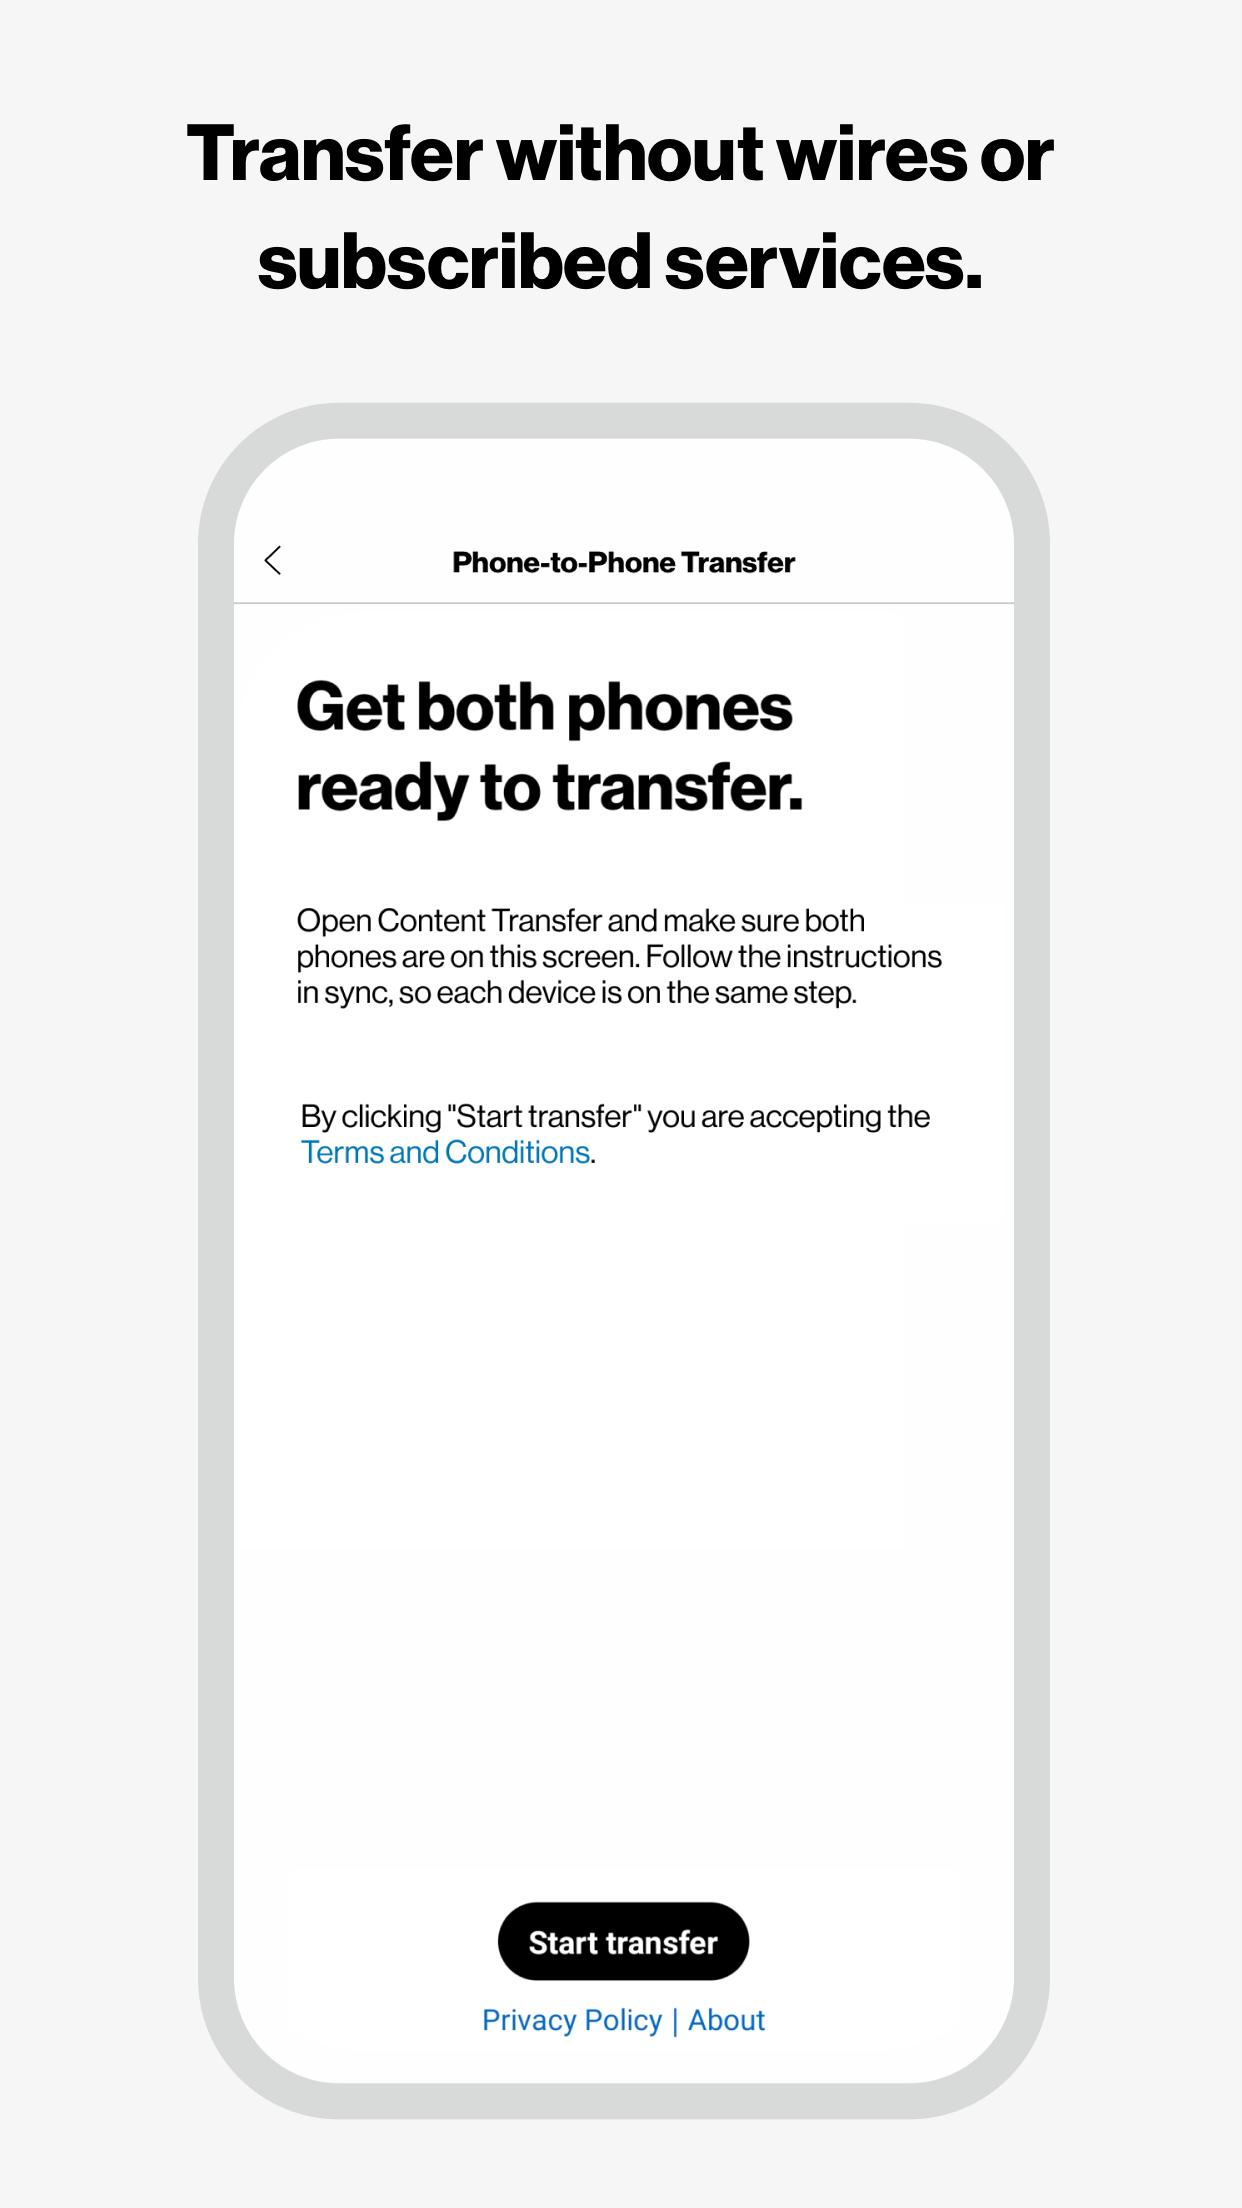 Content transfer mobile. Content transfer